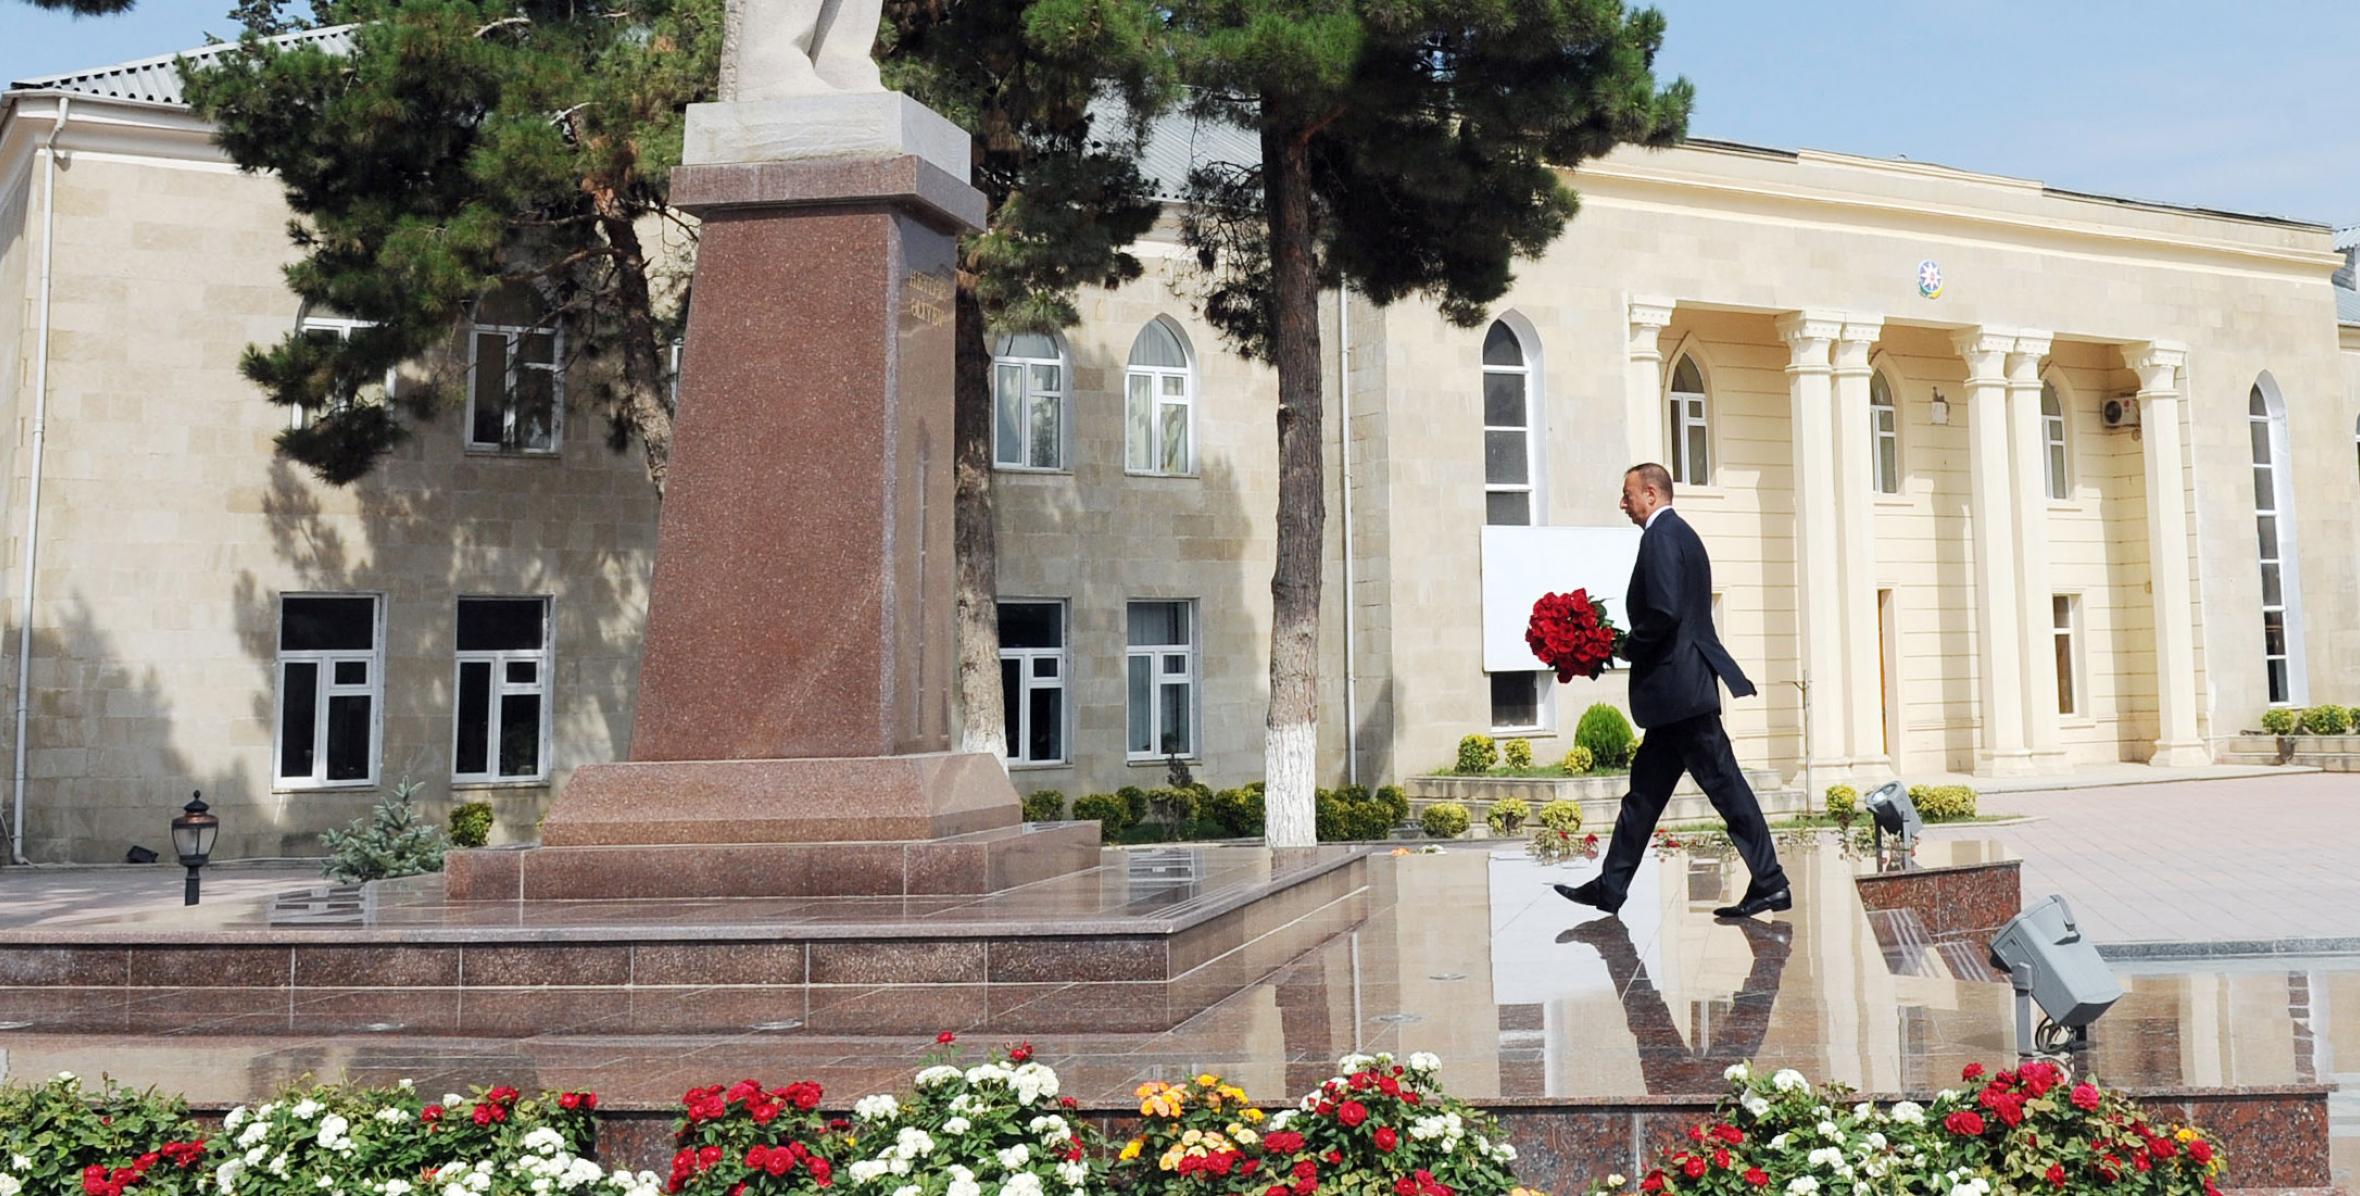 Ilham Aliyev visited the statue of nationwide leader Heydar Aliyev in Shabran